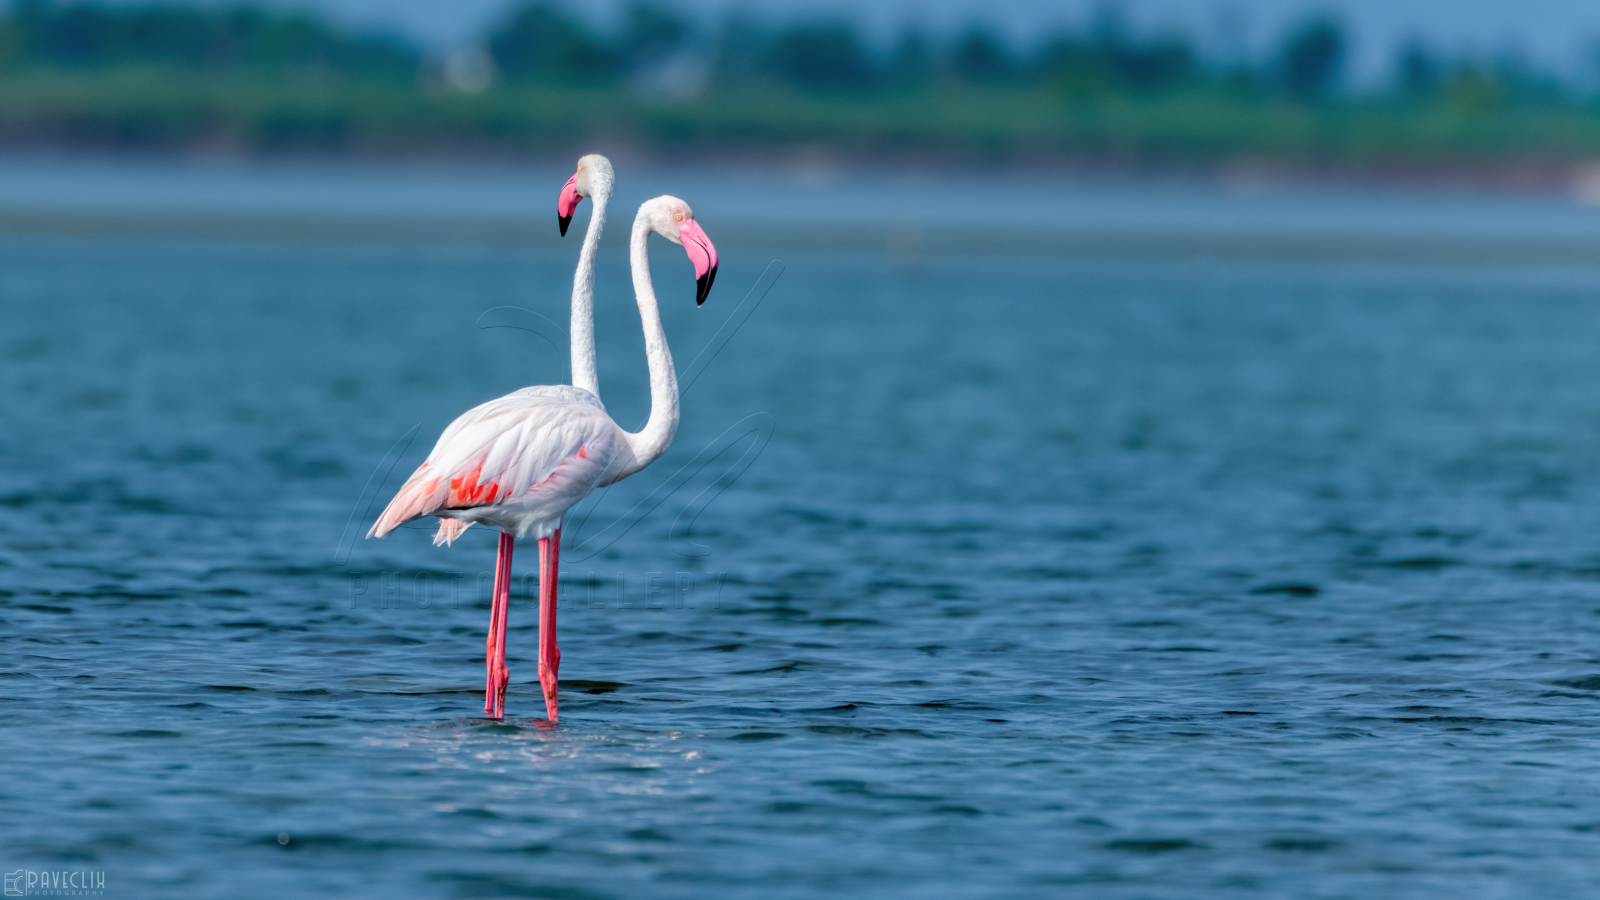 "Surahi" - Greater Flamingo(s)